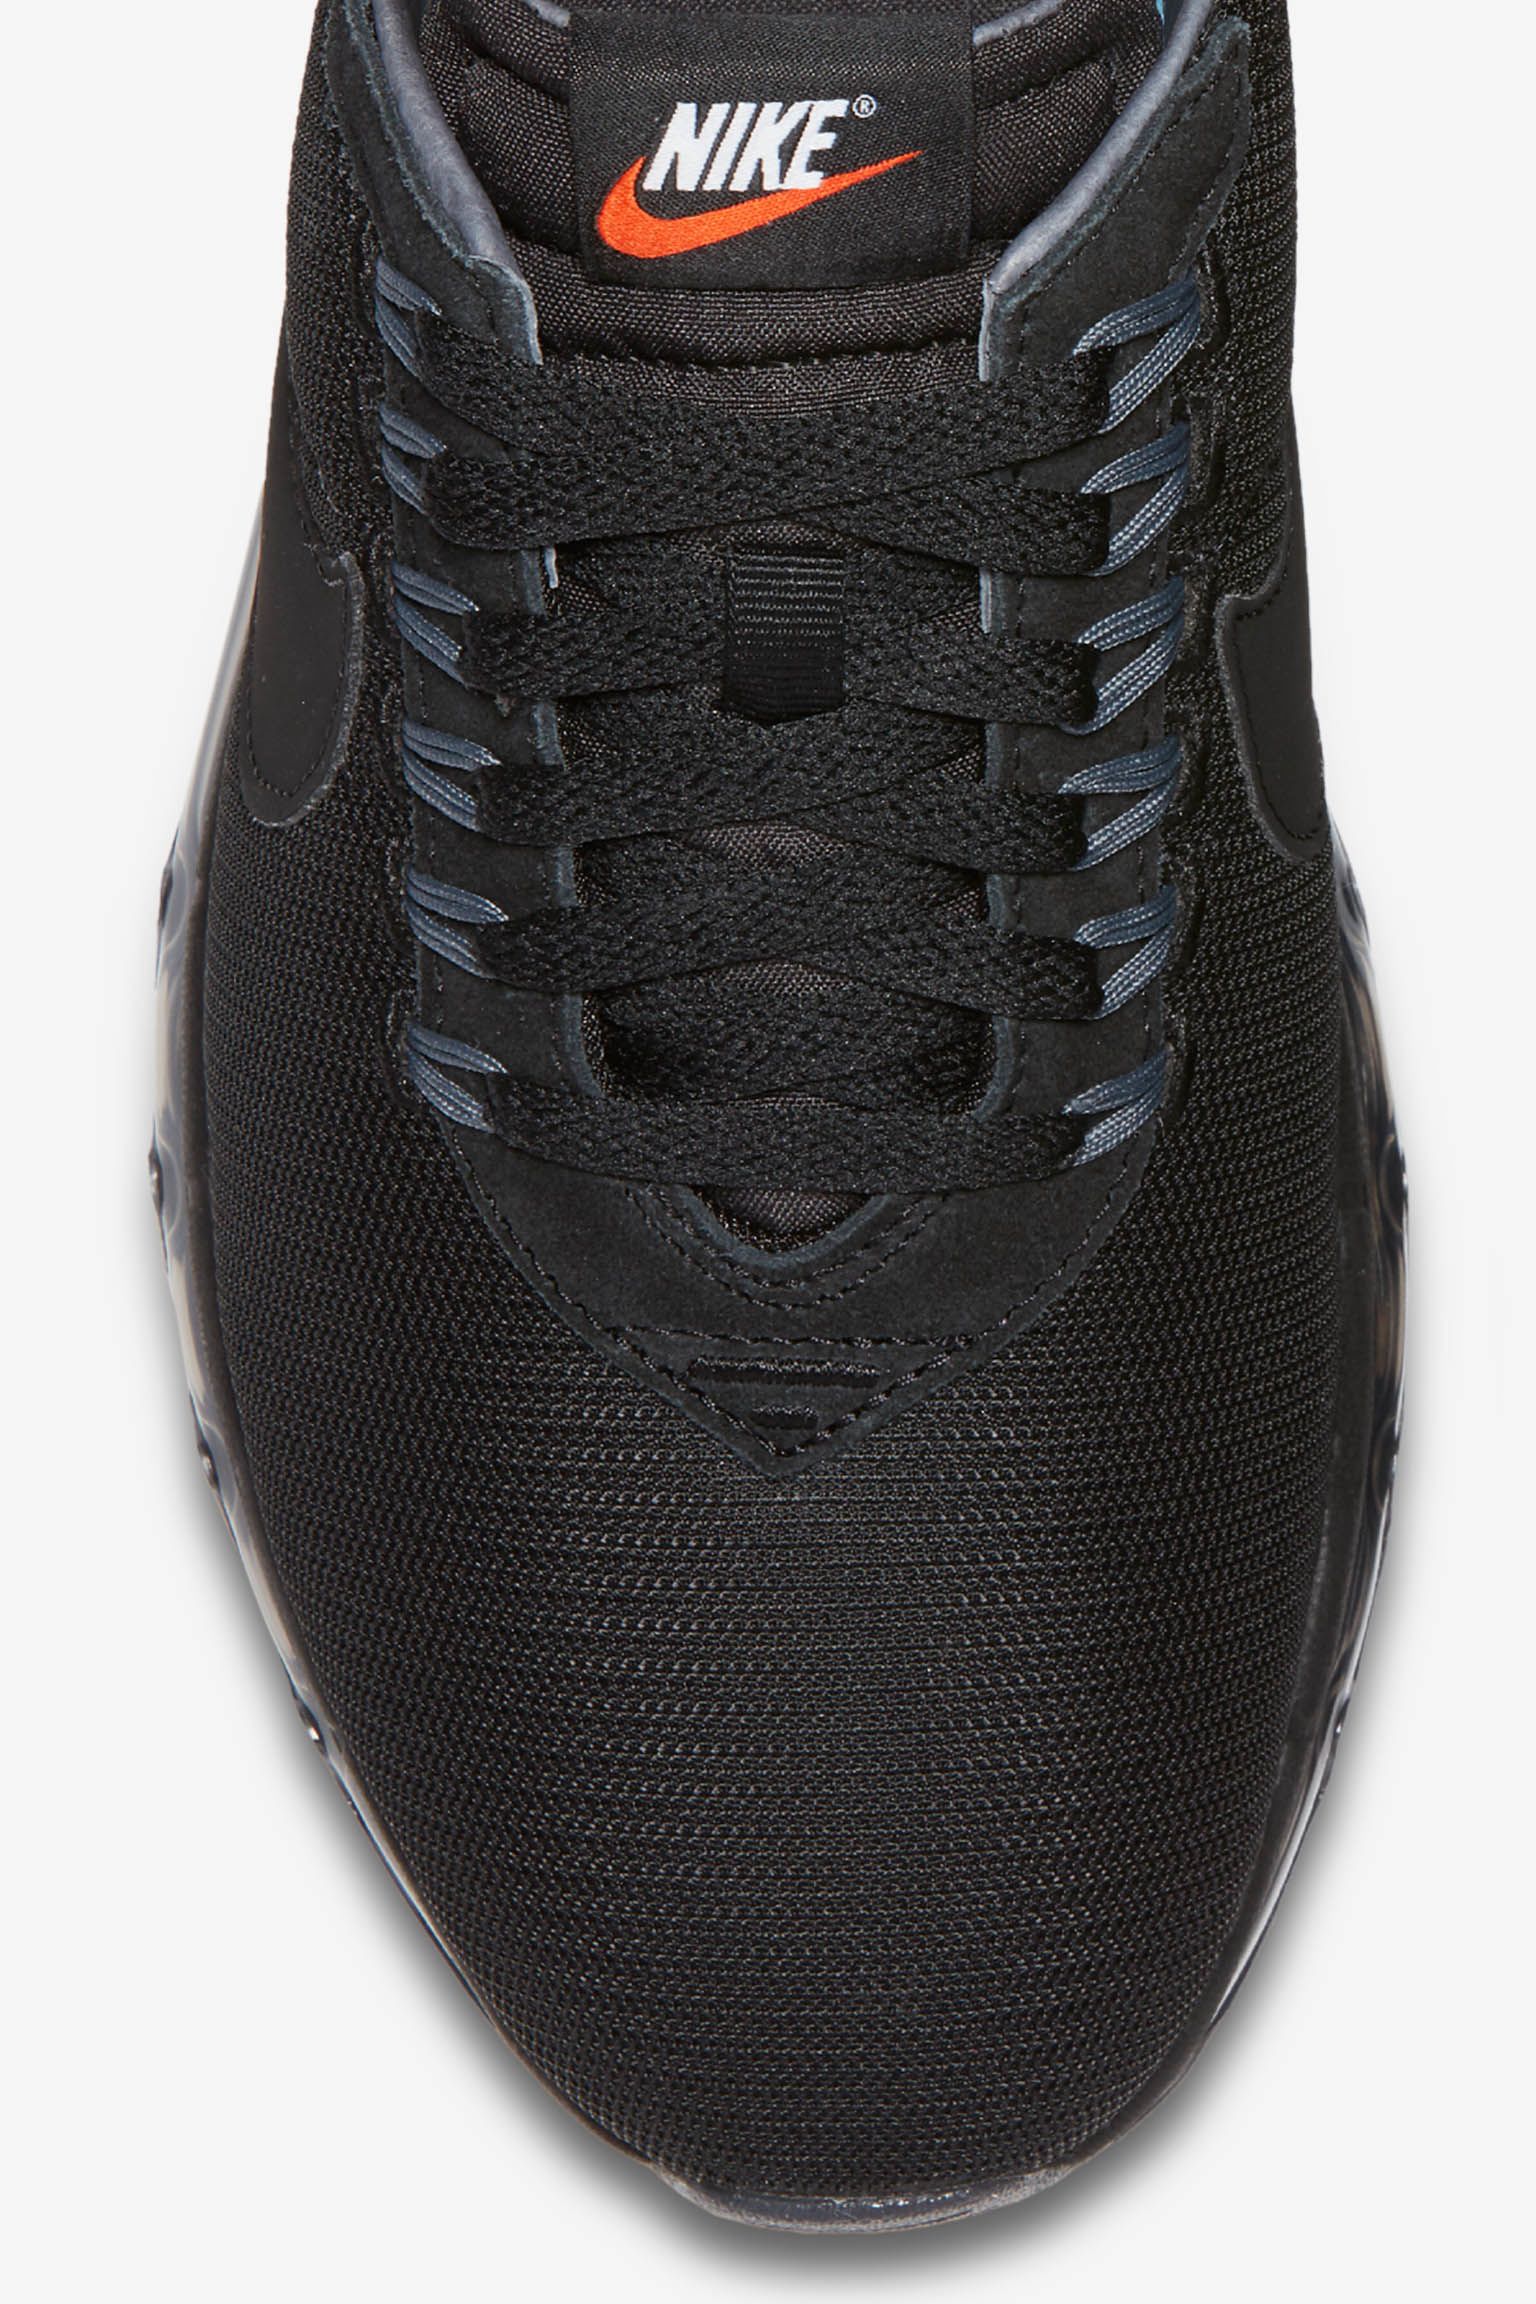 Nike Air Max LD-Zero 'Black & Dark Grey'. Nike SNKRS GB